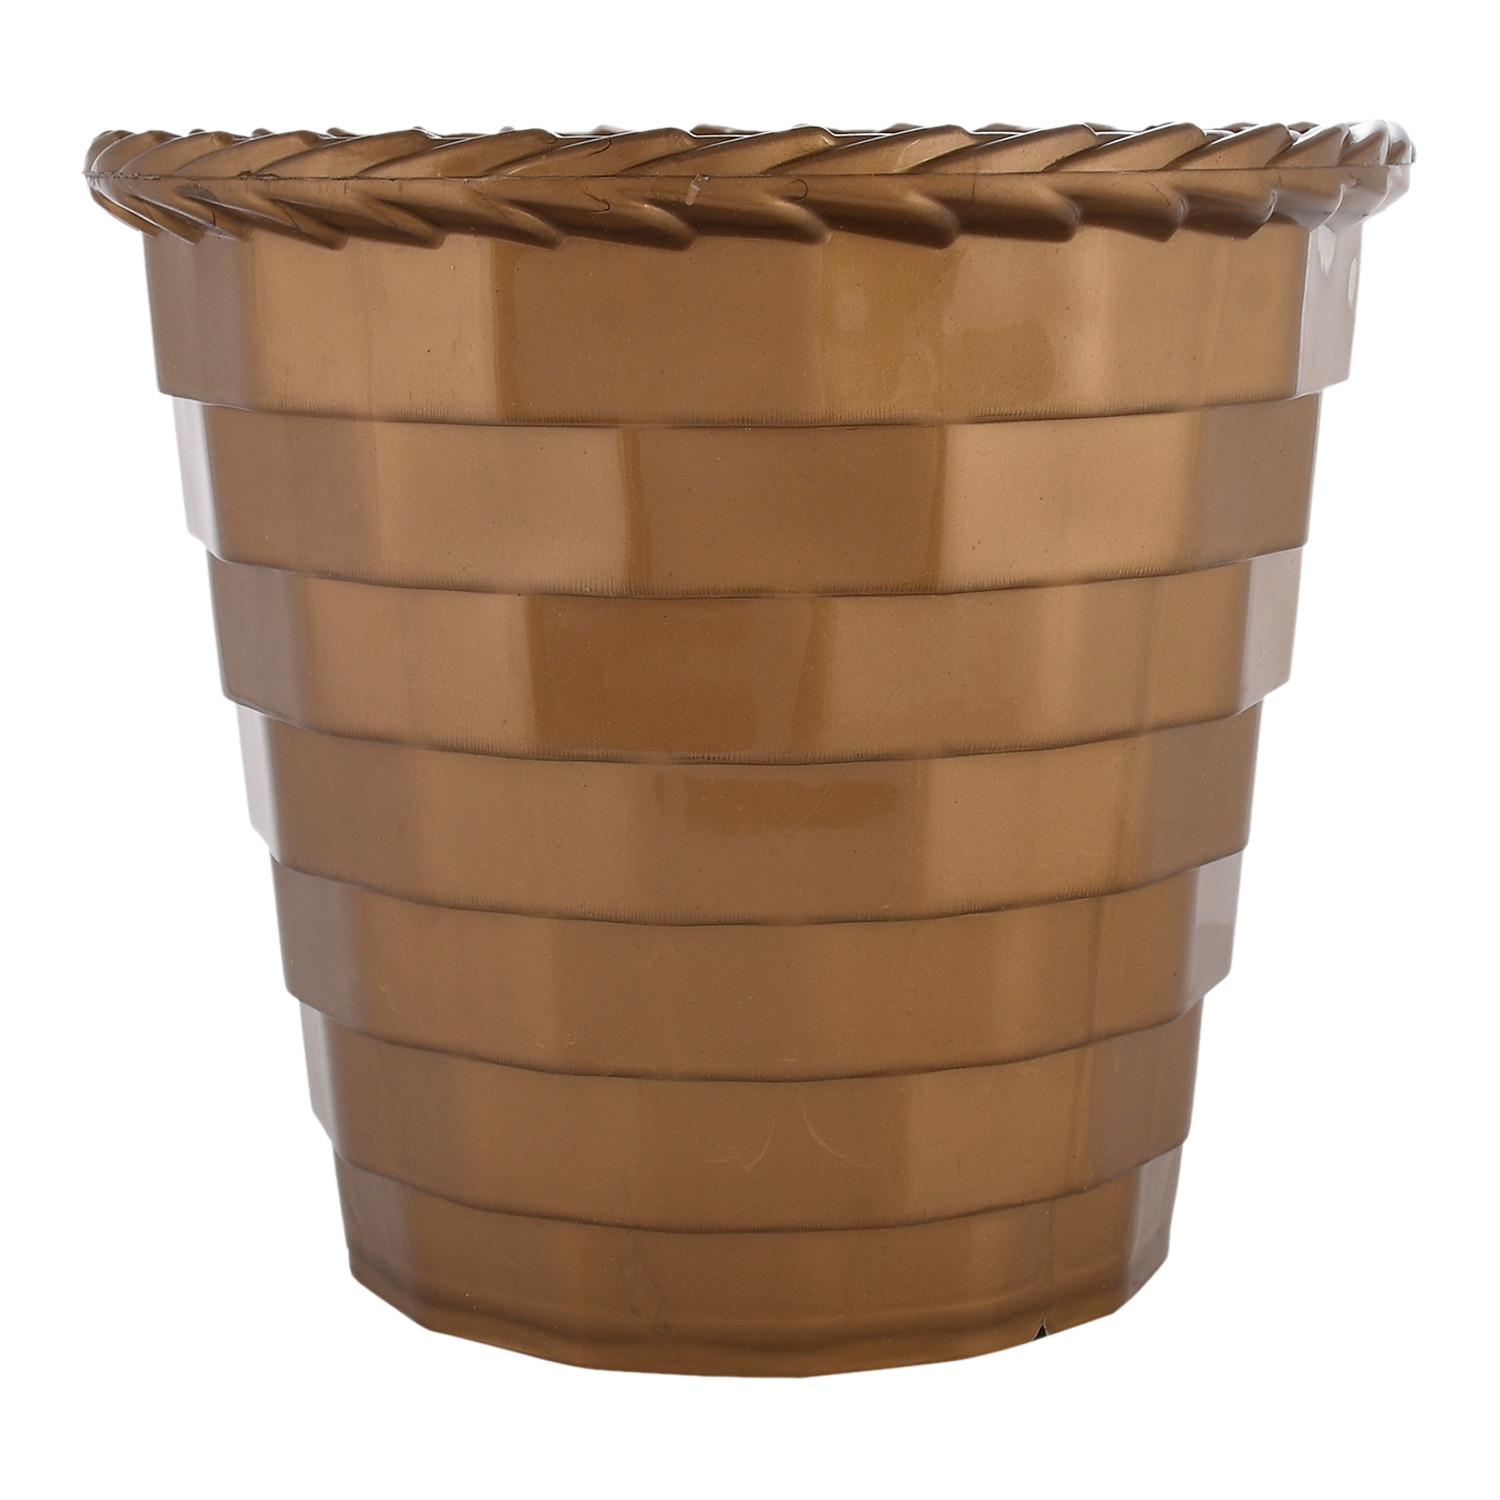 Kuber Industries Brick Flower Pot|Durable Plastic Flower Pots|Planters for Home Décor|Garden|Living Room|Balcony|8 Inch|Pack of 5 (Multicolor)